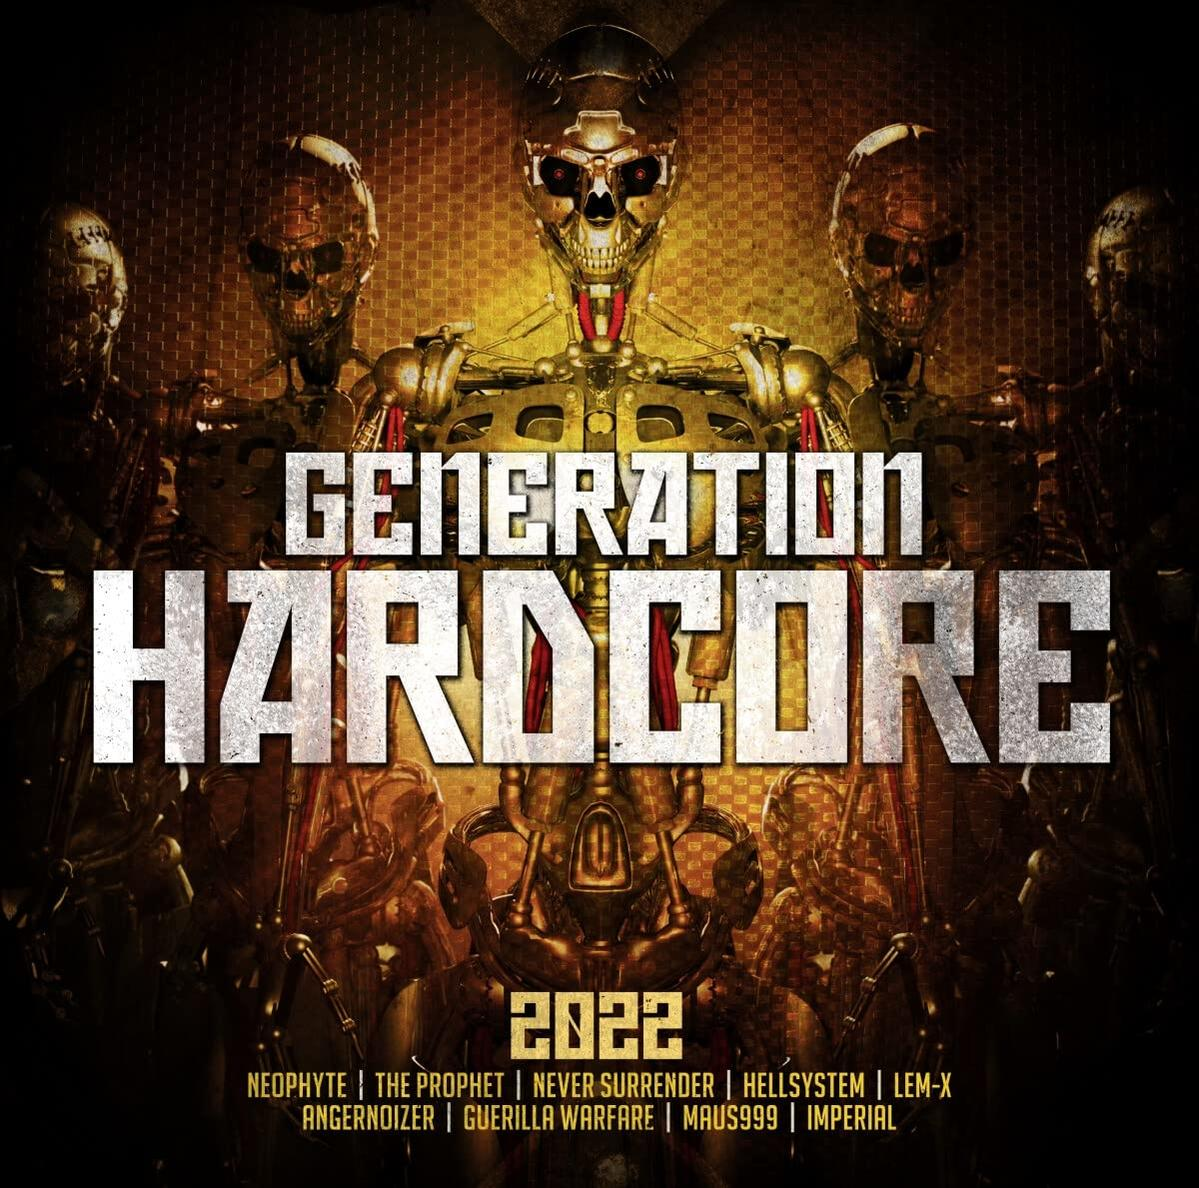 Hardcore Various (CD) Generation - - 2022